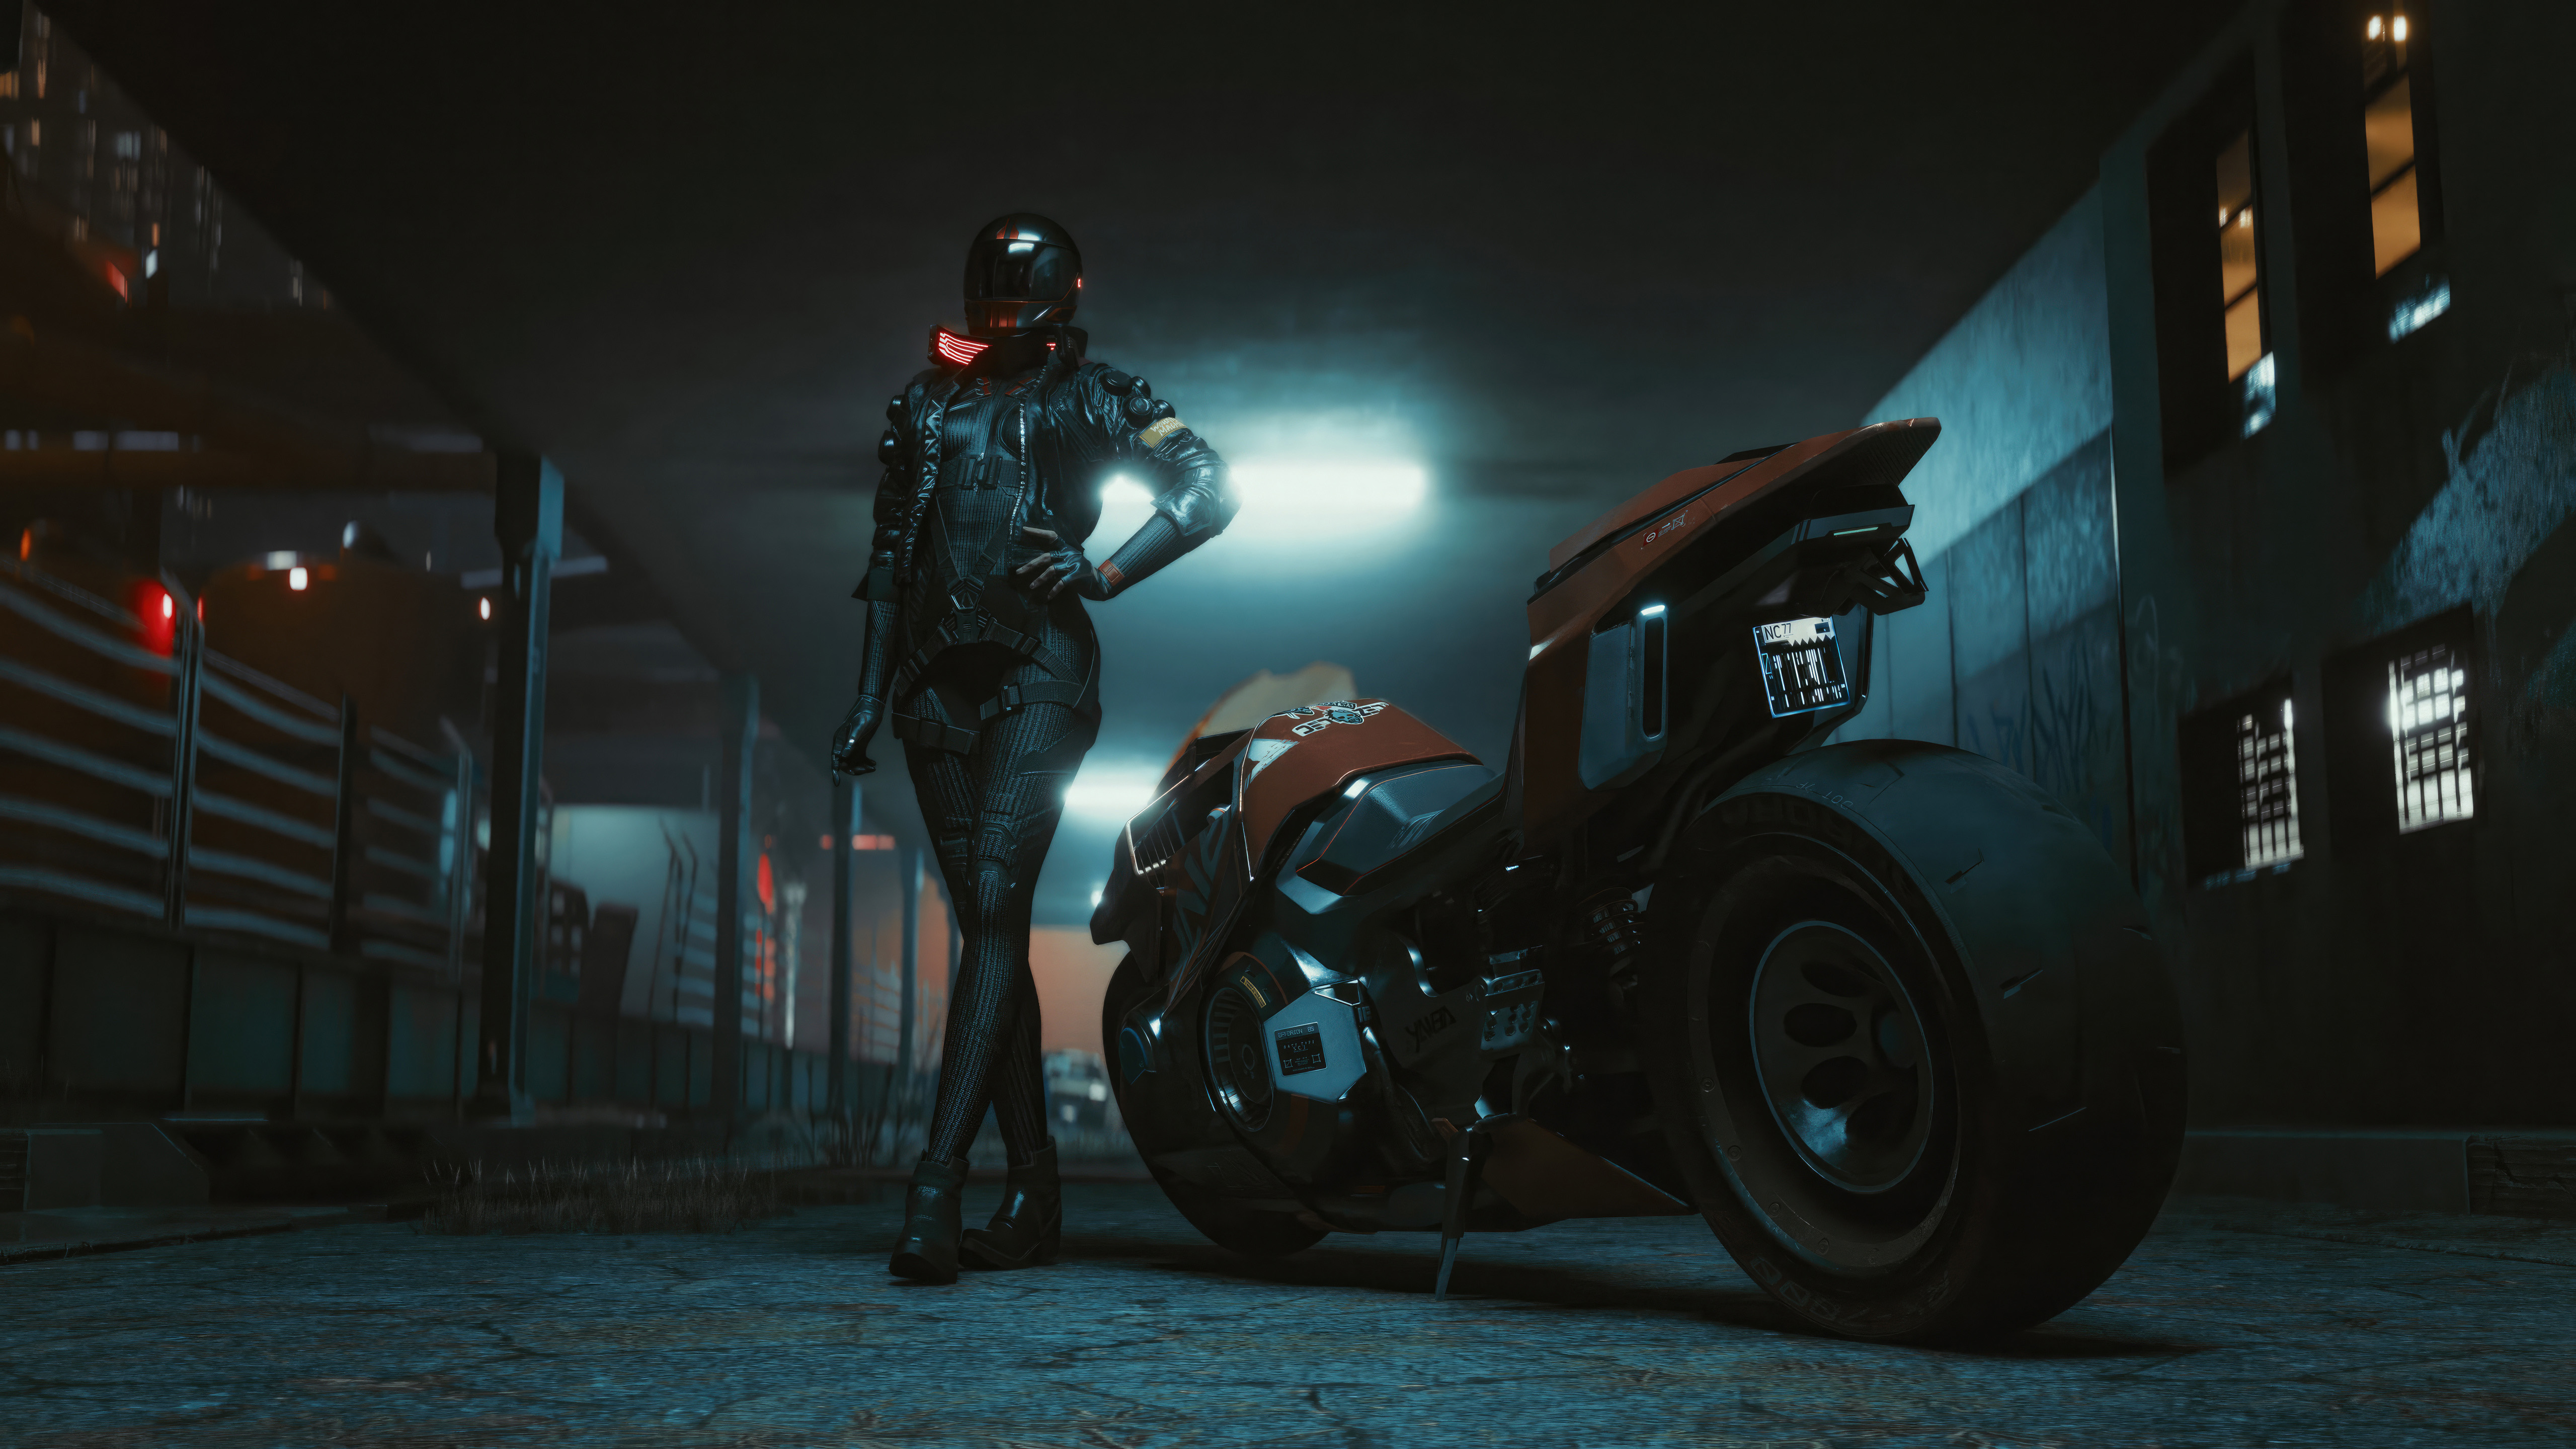 Fondos de pantalla Cyberpunk 2077 Mujer motociclista